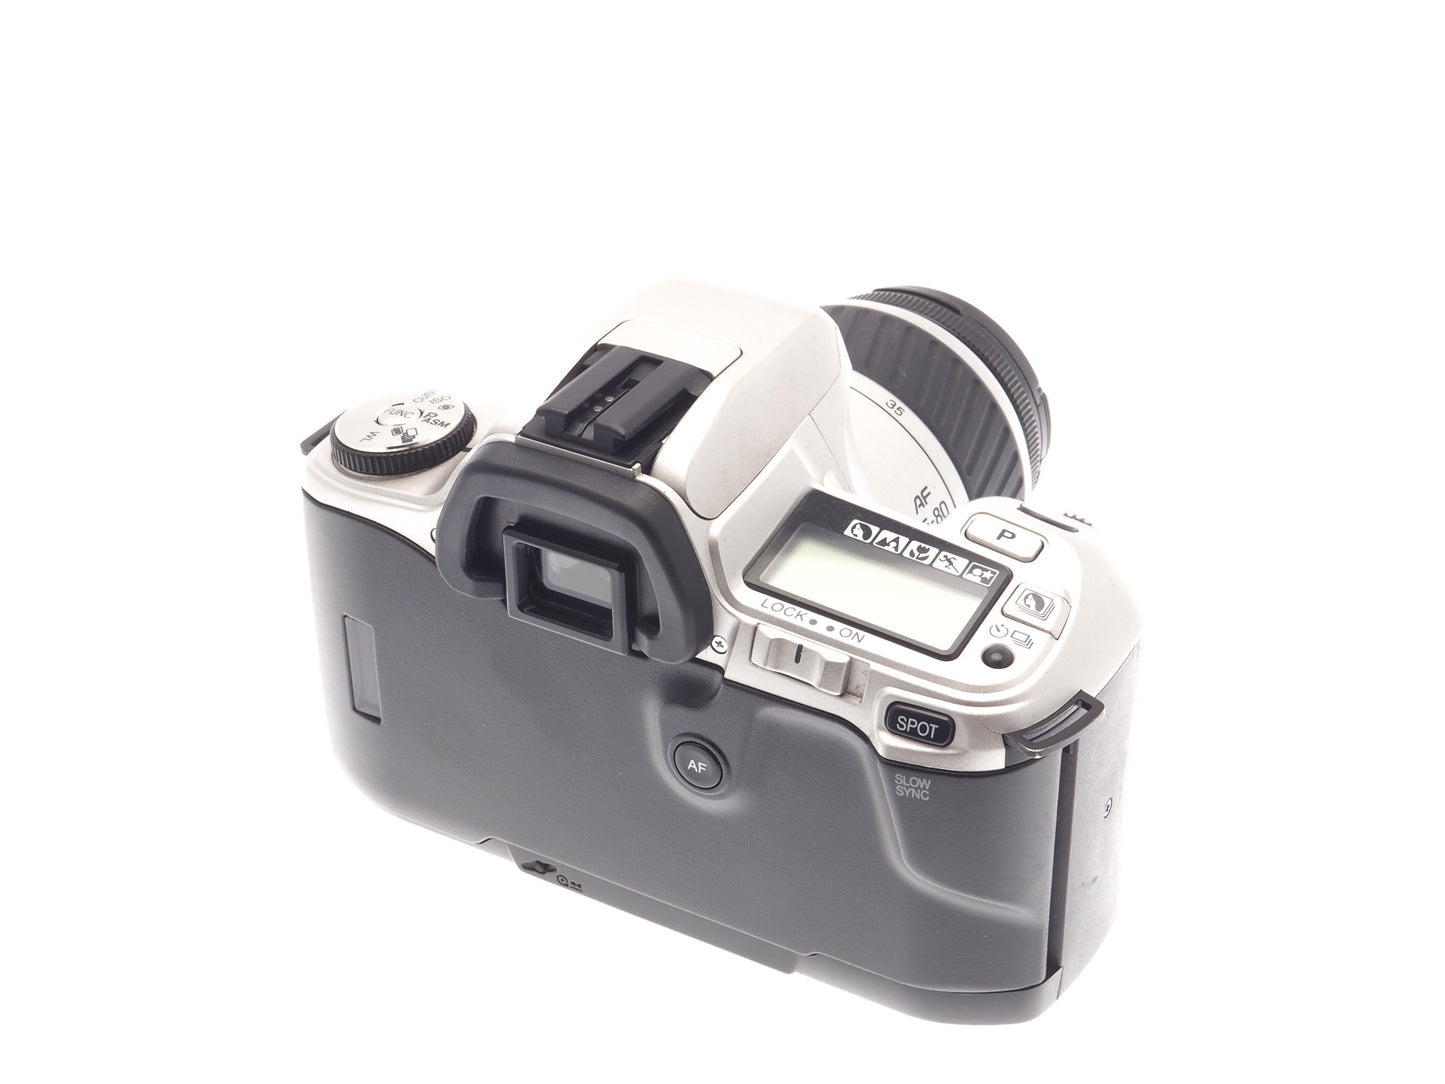 Minolta Dynax 505si + 35-80mm f4-5.6 AF Zoom